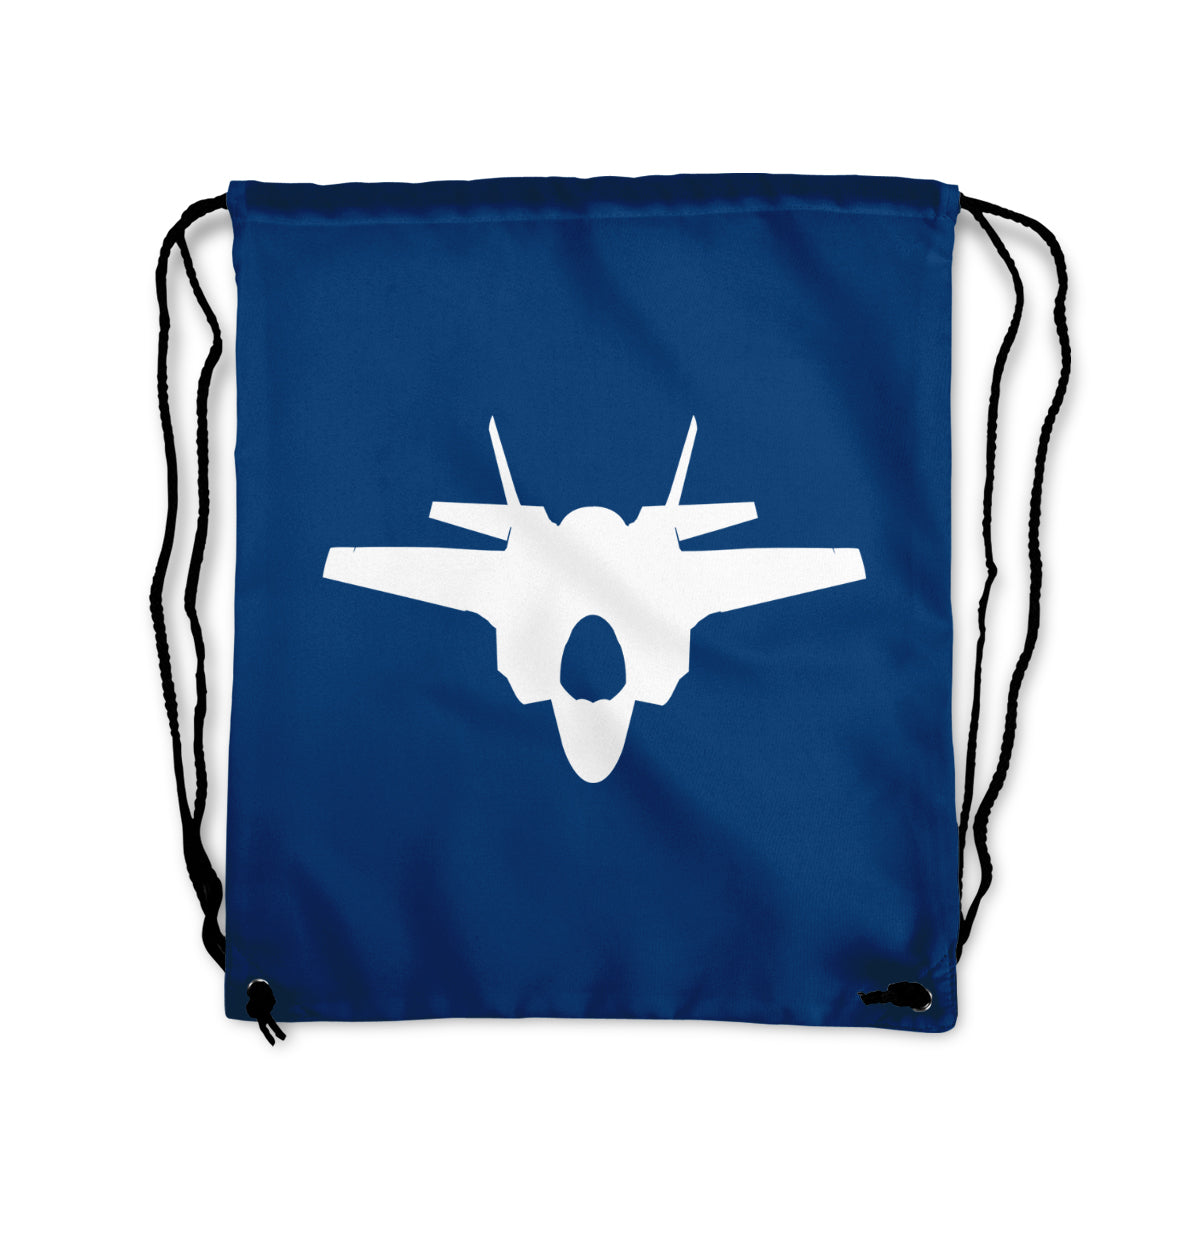 Lockheed Martin F-35 Lightning II Silhouette Designed Drawstring Bags